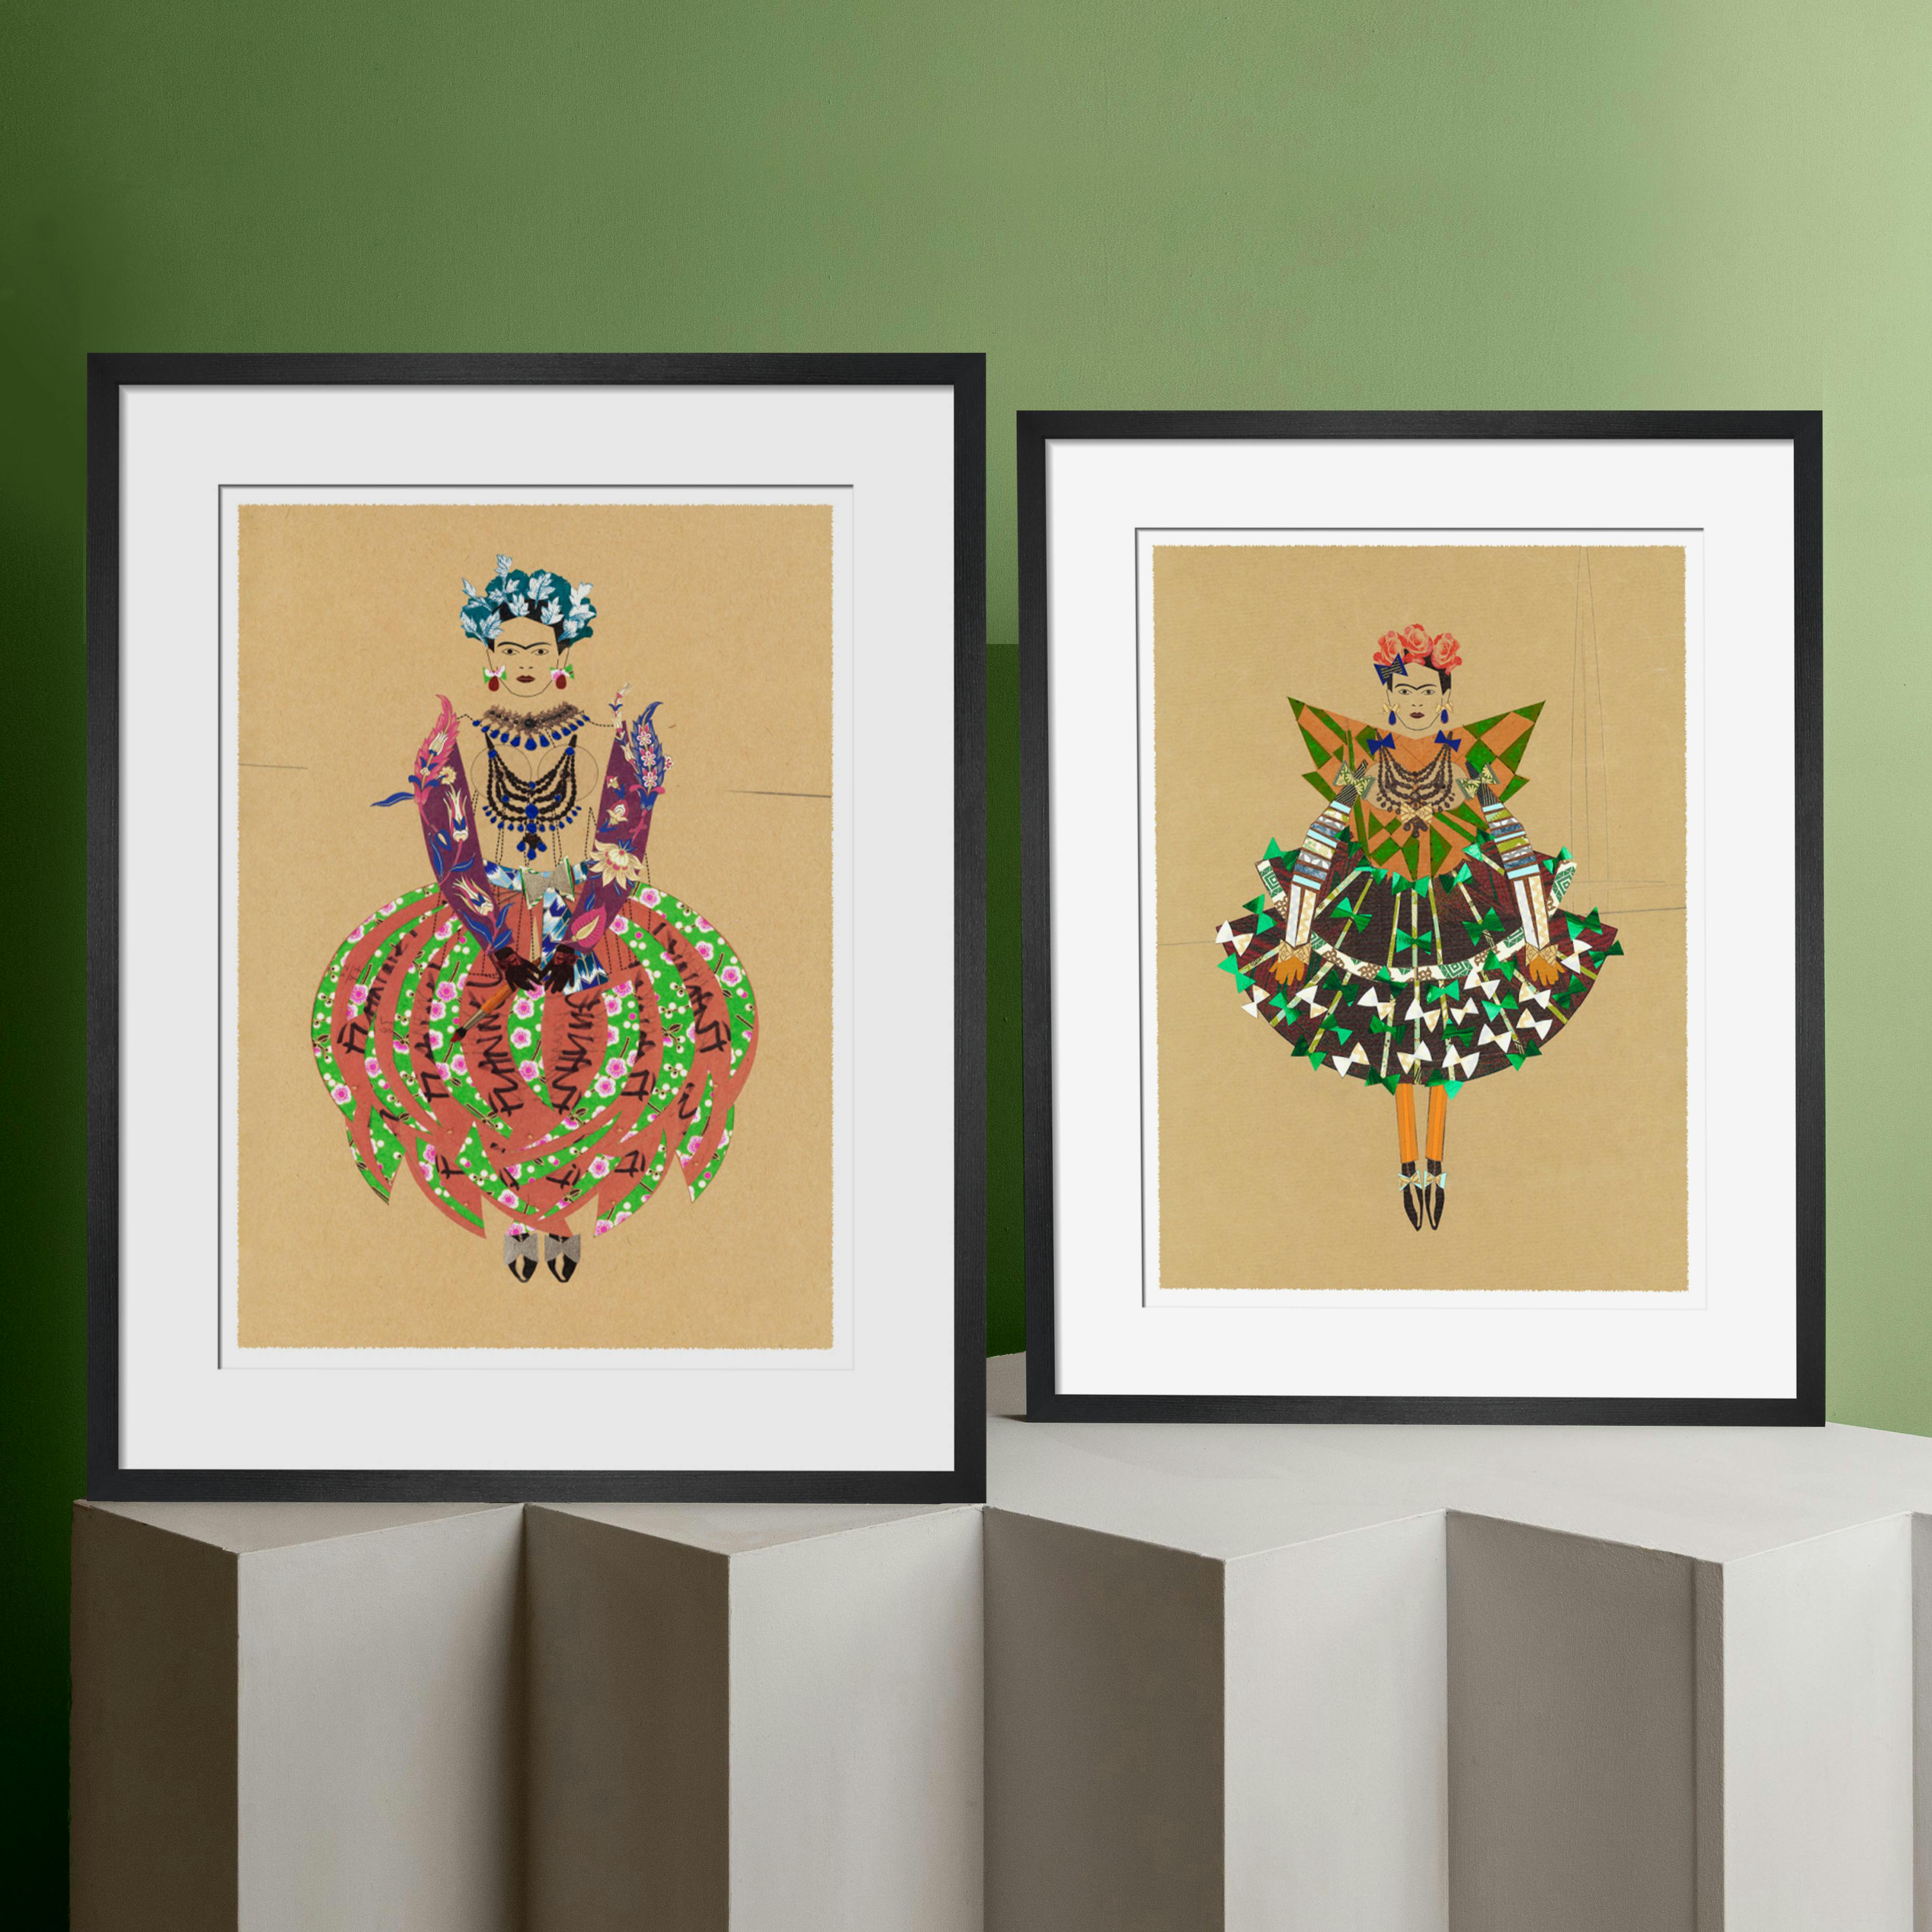 Hormazd Narielwalla’s Frida Kahlo-inspired ‘Queen’ prints